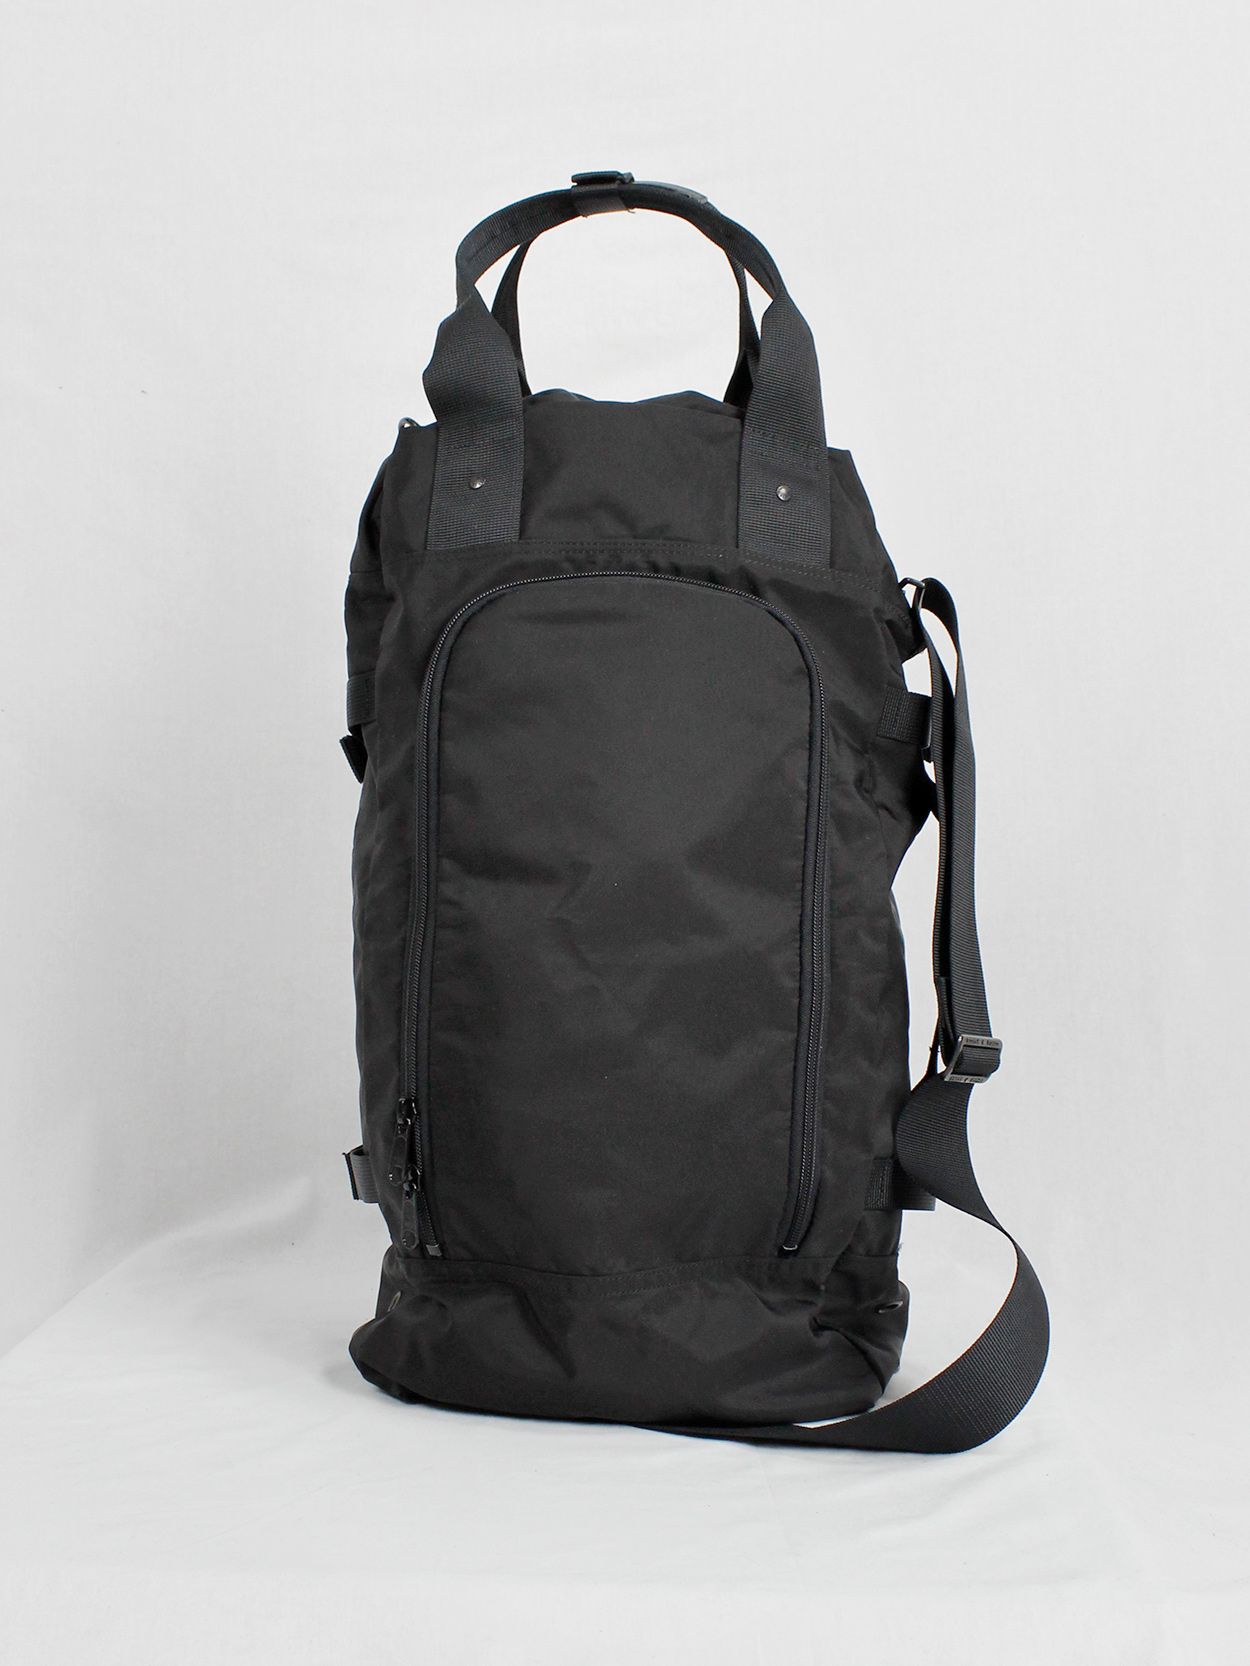 yohji yamamoto yACCS Pour Tous black duffle bag with utility straps 90s (7)